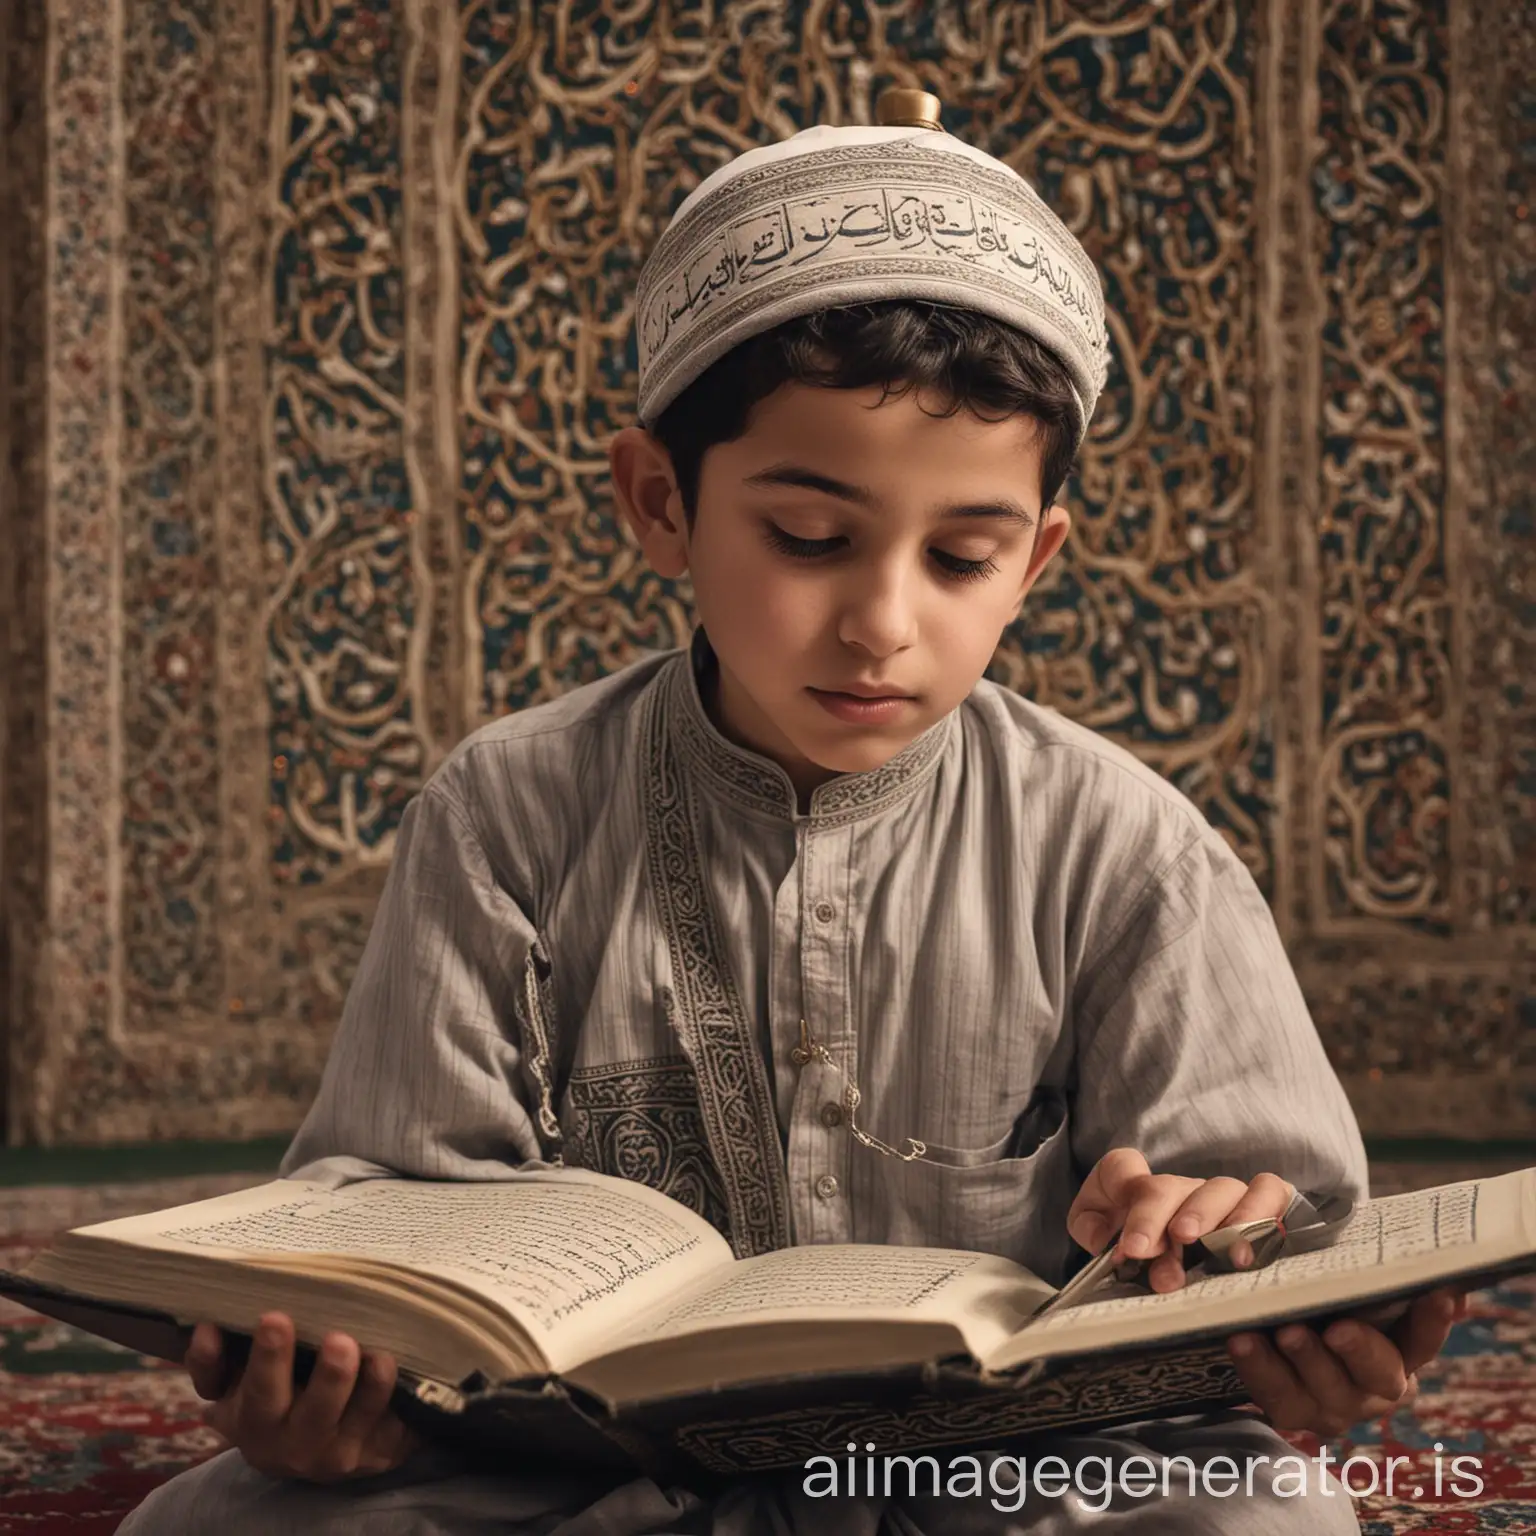 a boy reads quran